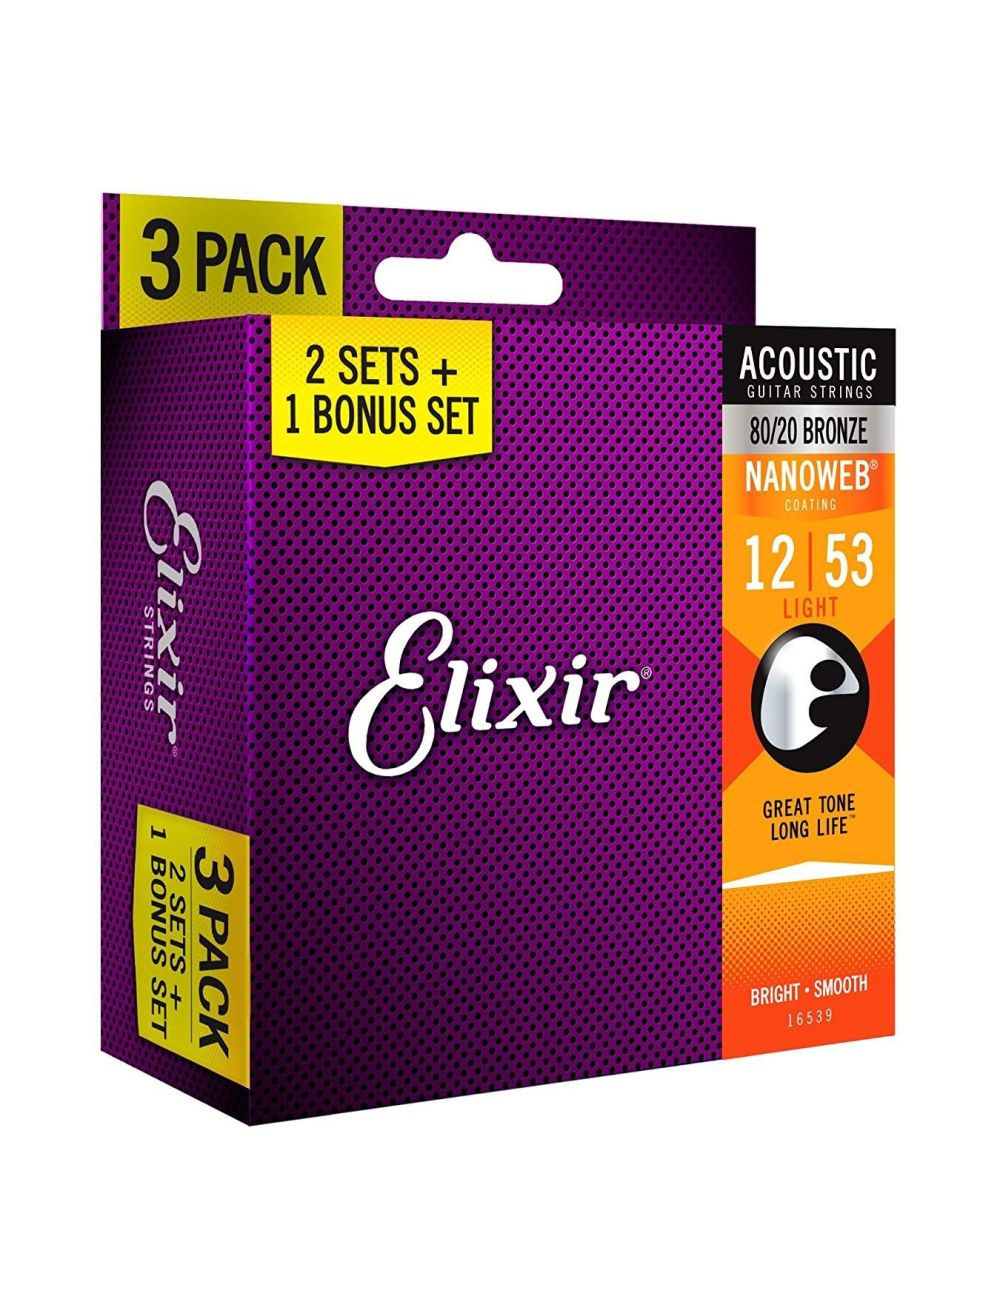 Akustische Gitarrensaiten Elixir 80/20 Bronze 12-53 - Packung mit 3 Sätzen